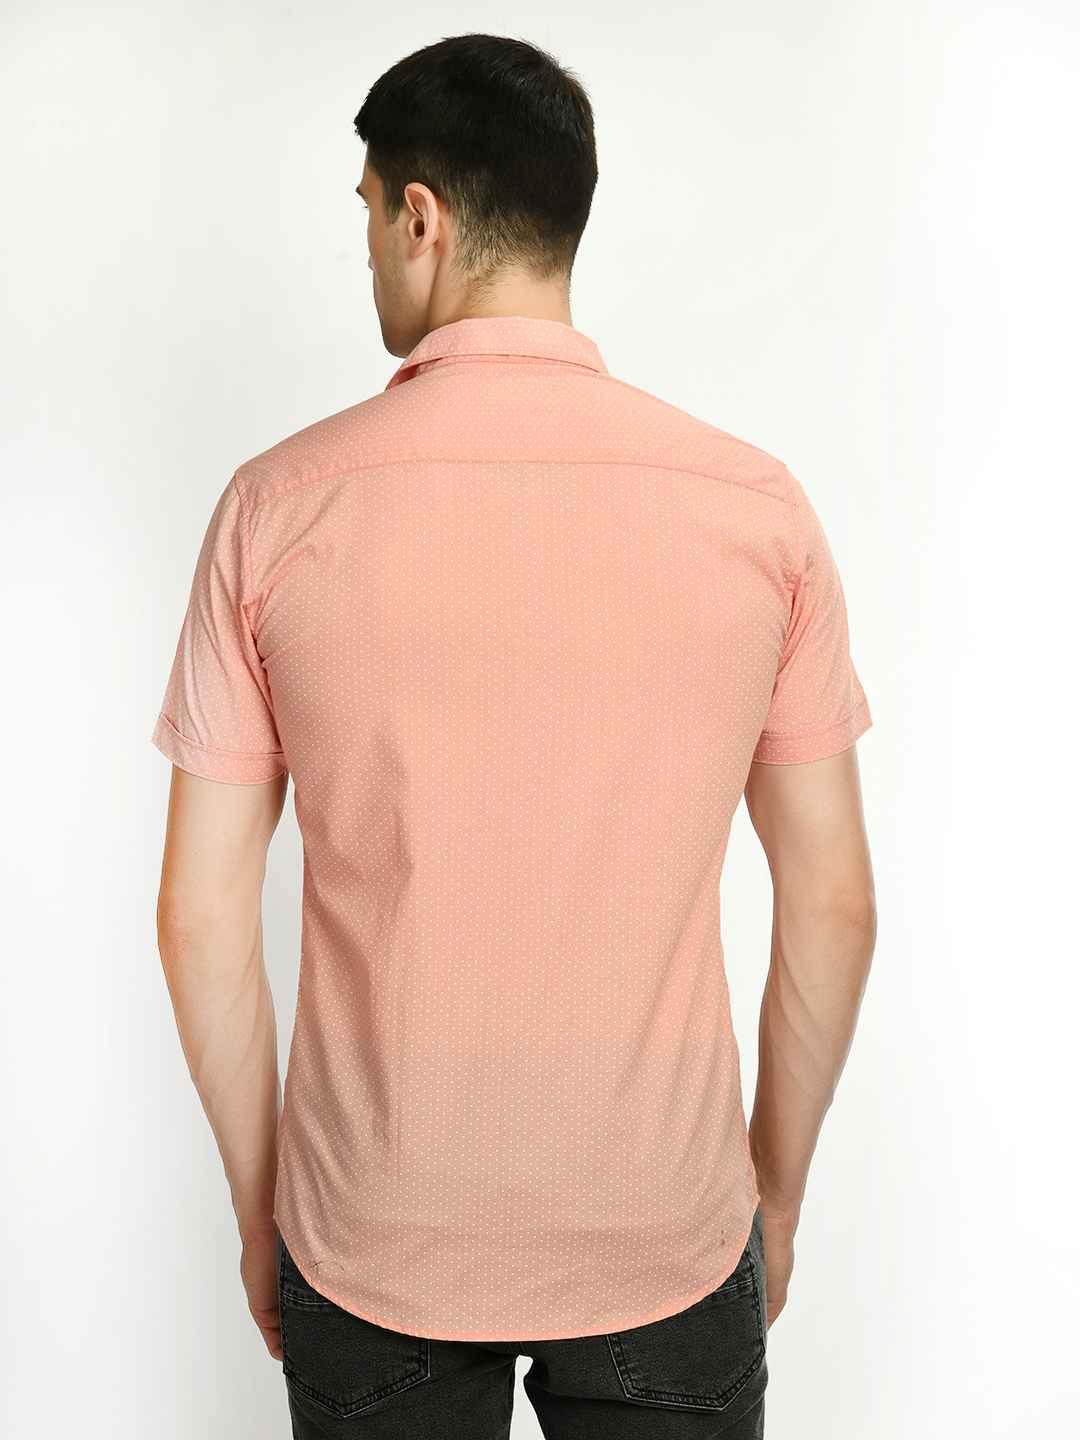 Men's Printed Cotton Short Sleeve Shirt